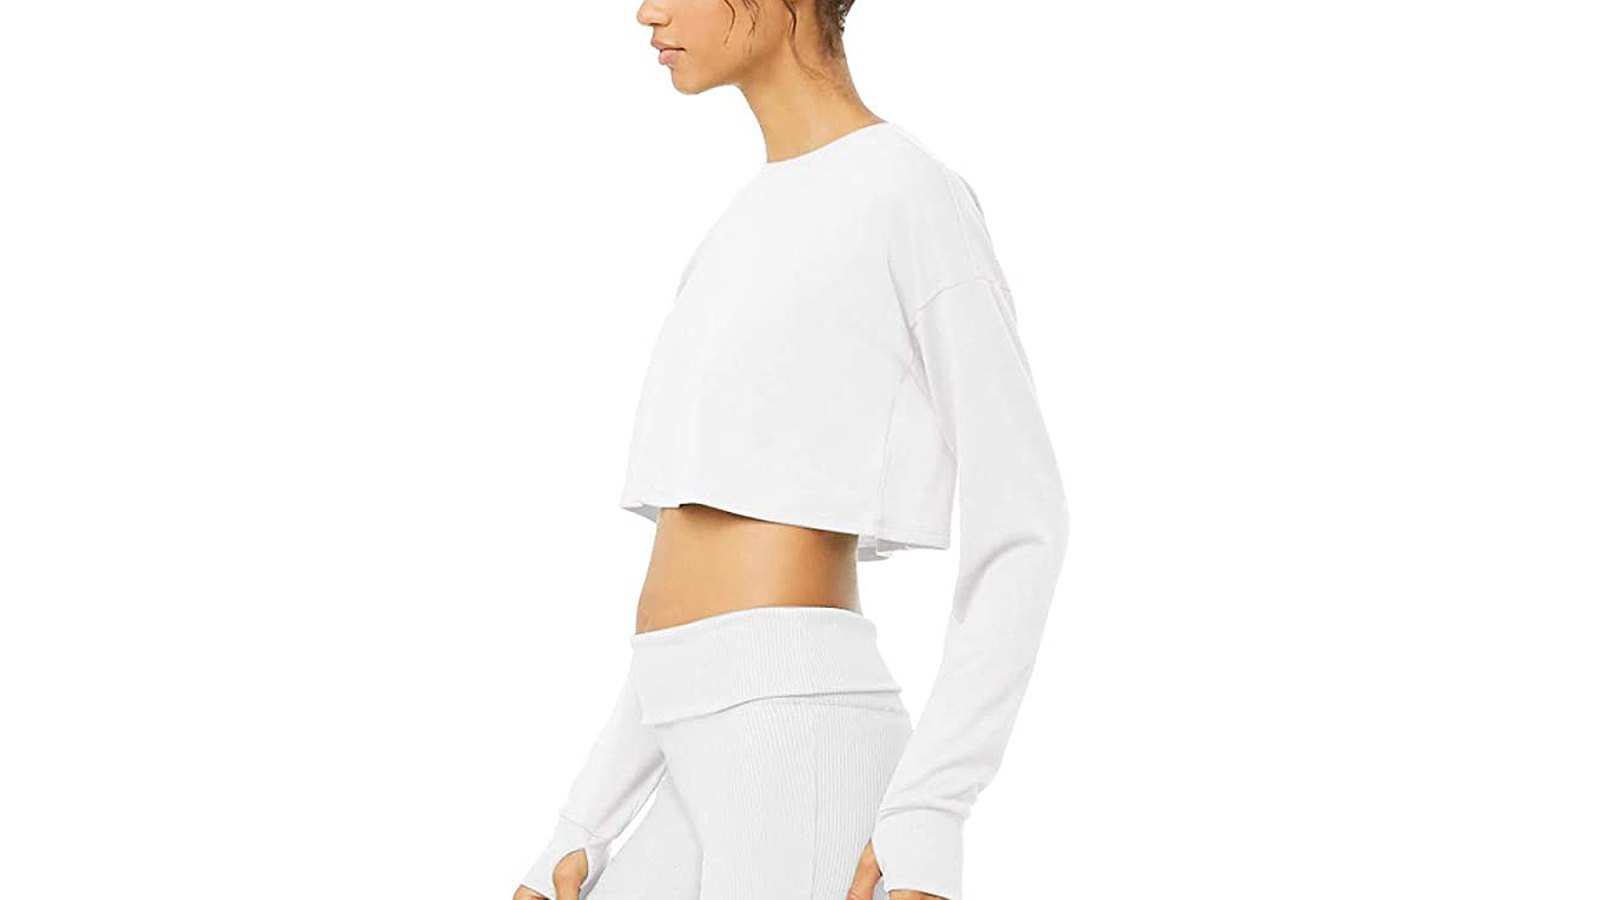 Bestisun Long Sleeve Crop Top Cropped Sweatshirt for Women